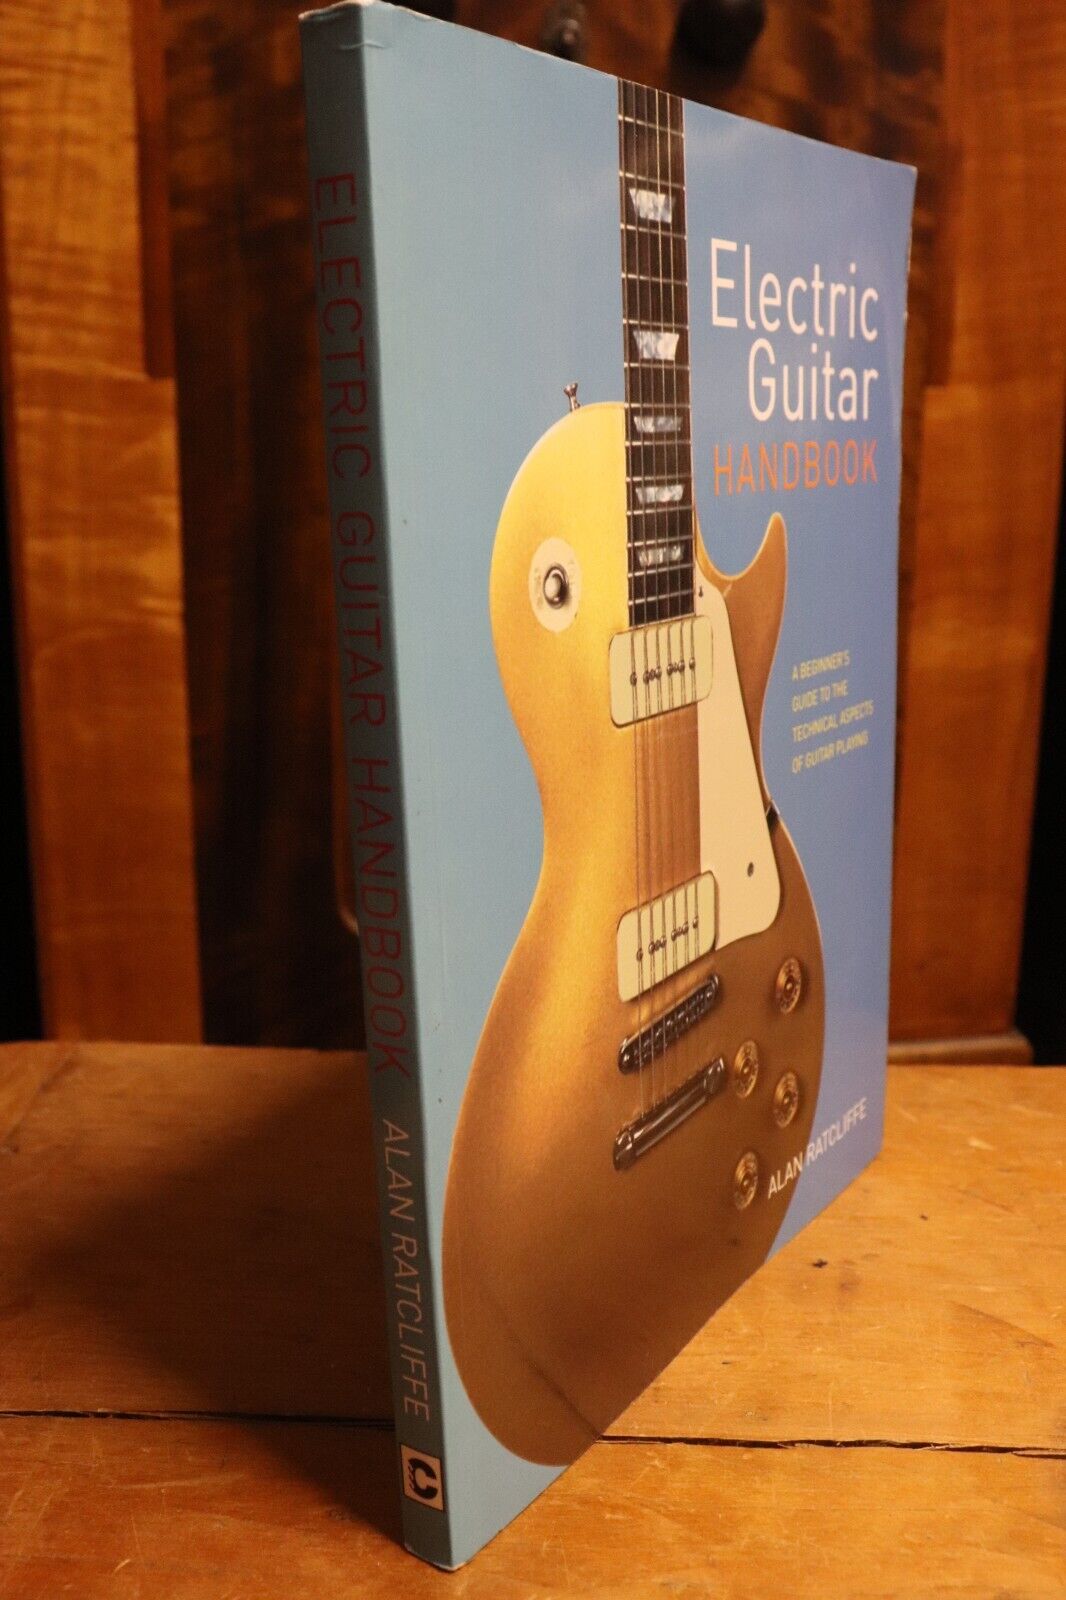 Electric Guitar Handbookby Alan Ratcliffe - 2007 - 0